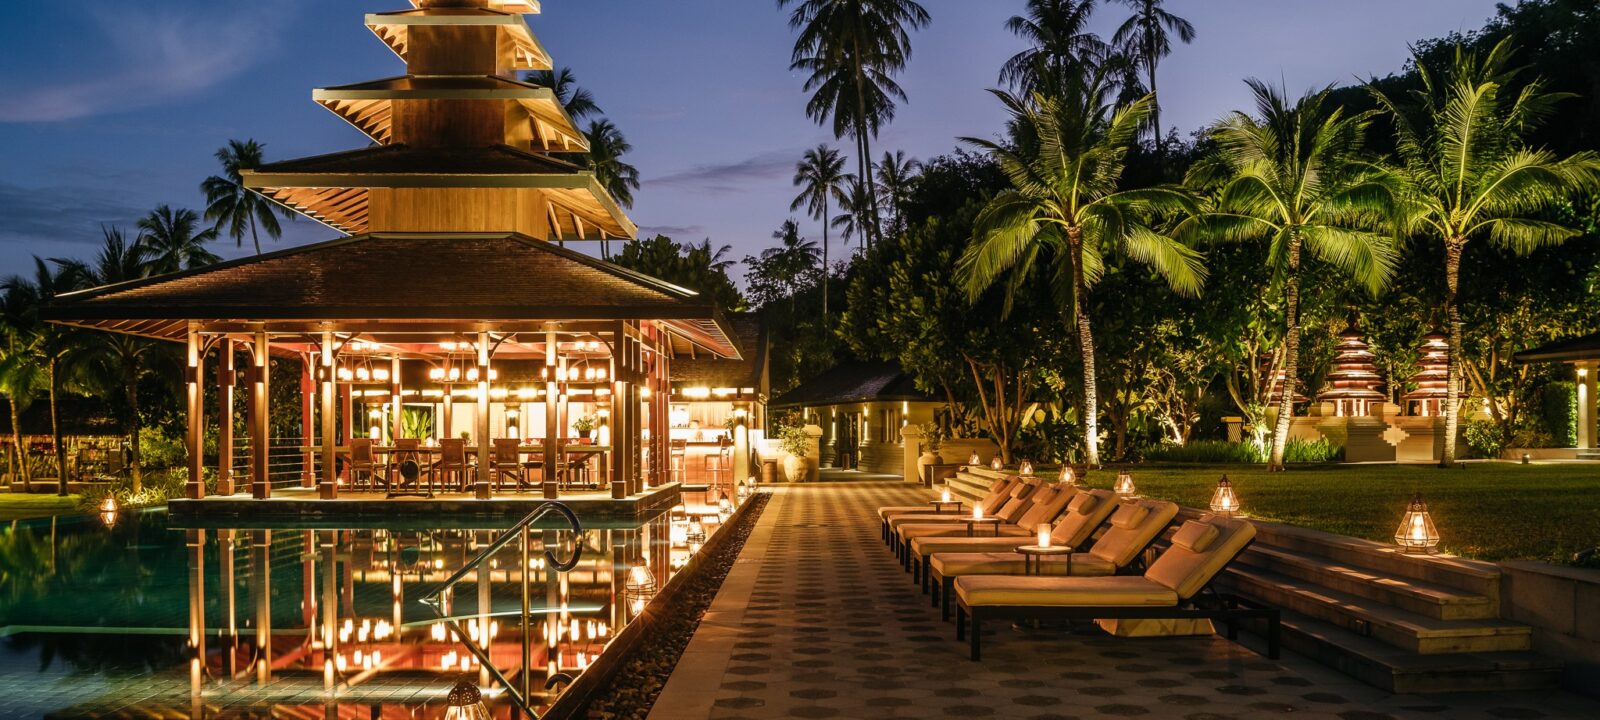 ANI Thailand. – Resort – Dining Pavilion night